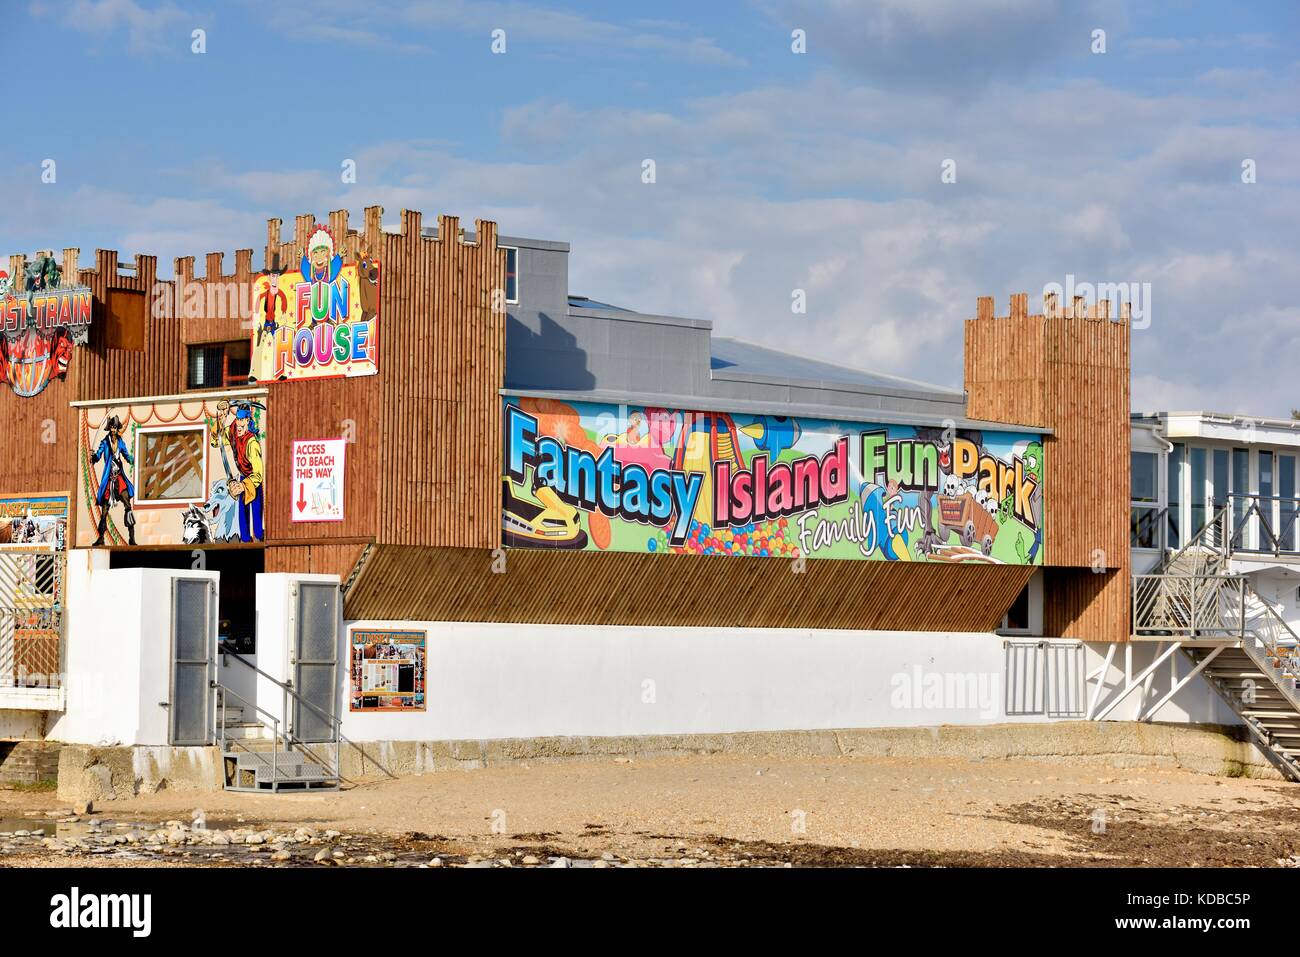 Fantasy Island amusement park Bowleaze Cove, Weymouth, Dorset England UK Banque D'Images